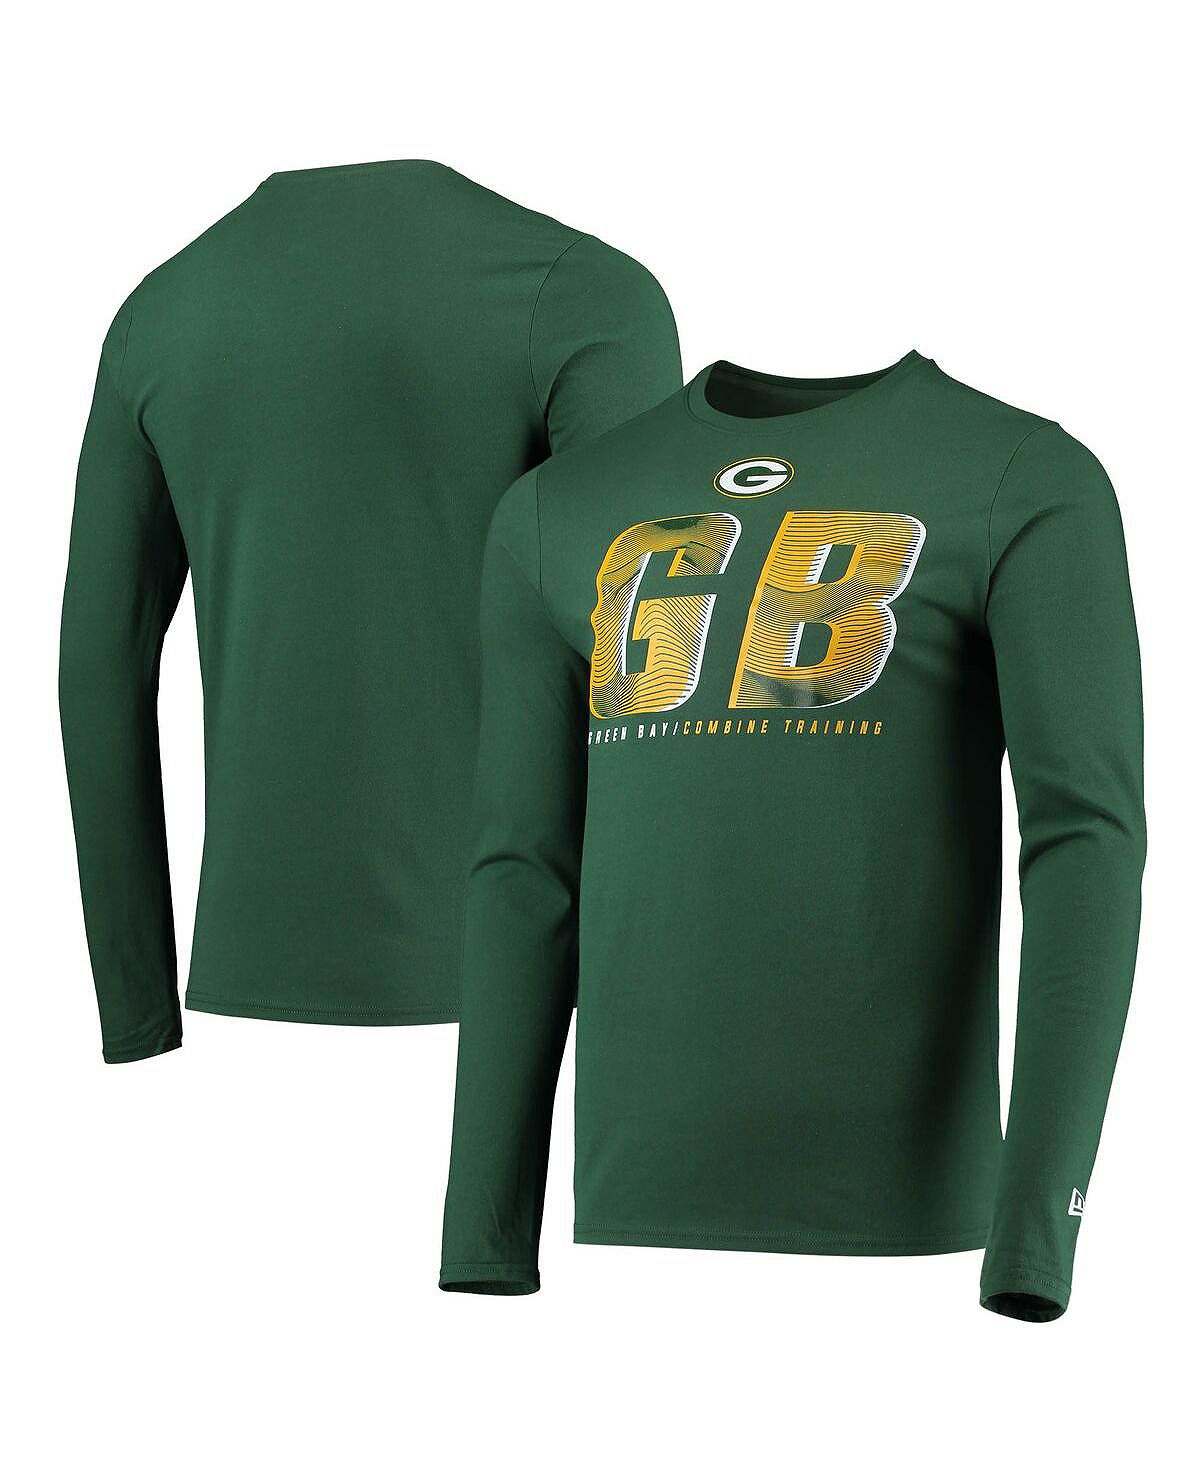 Мужская футболка с длинным рукавом green green bay packers combine authentic static abbreviation New Era, зеленый